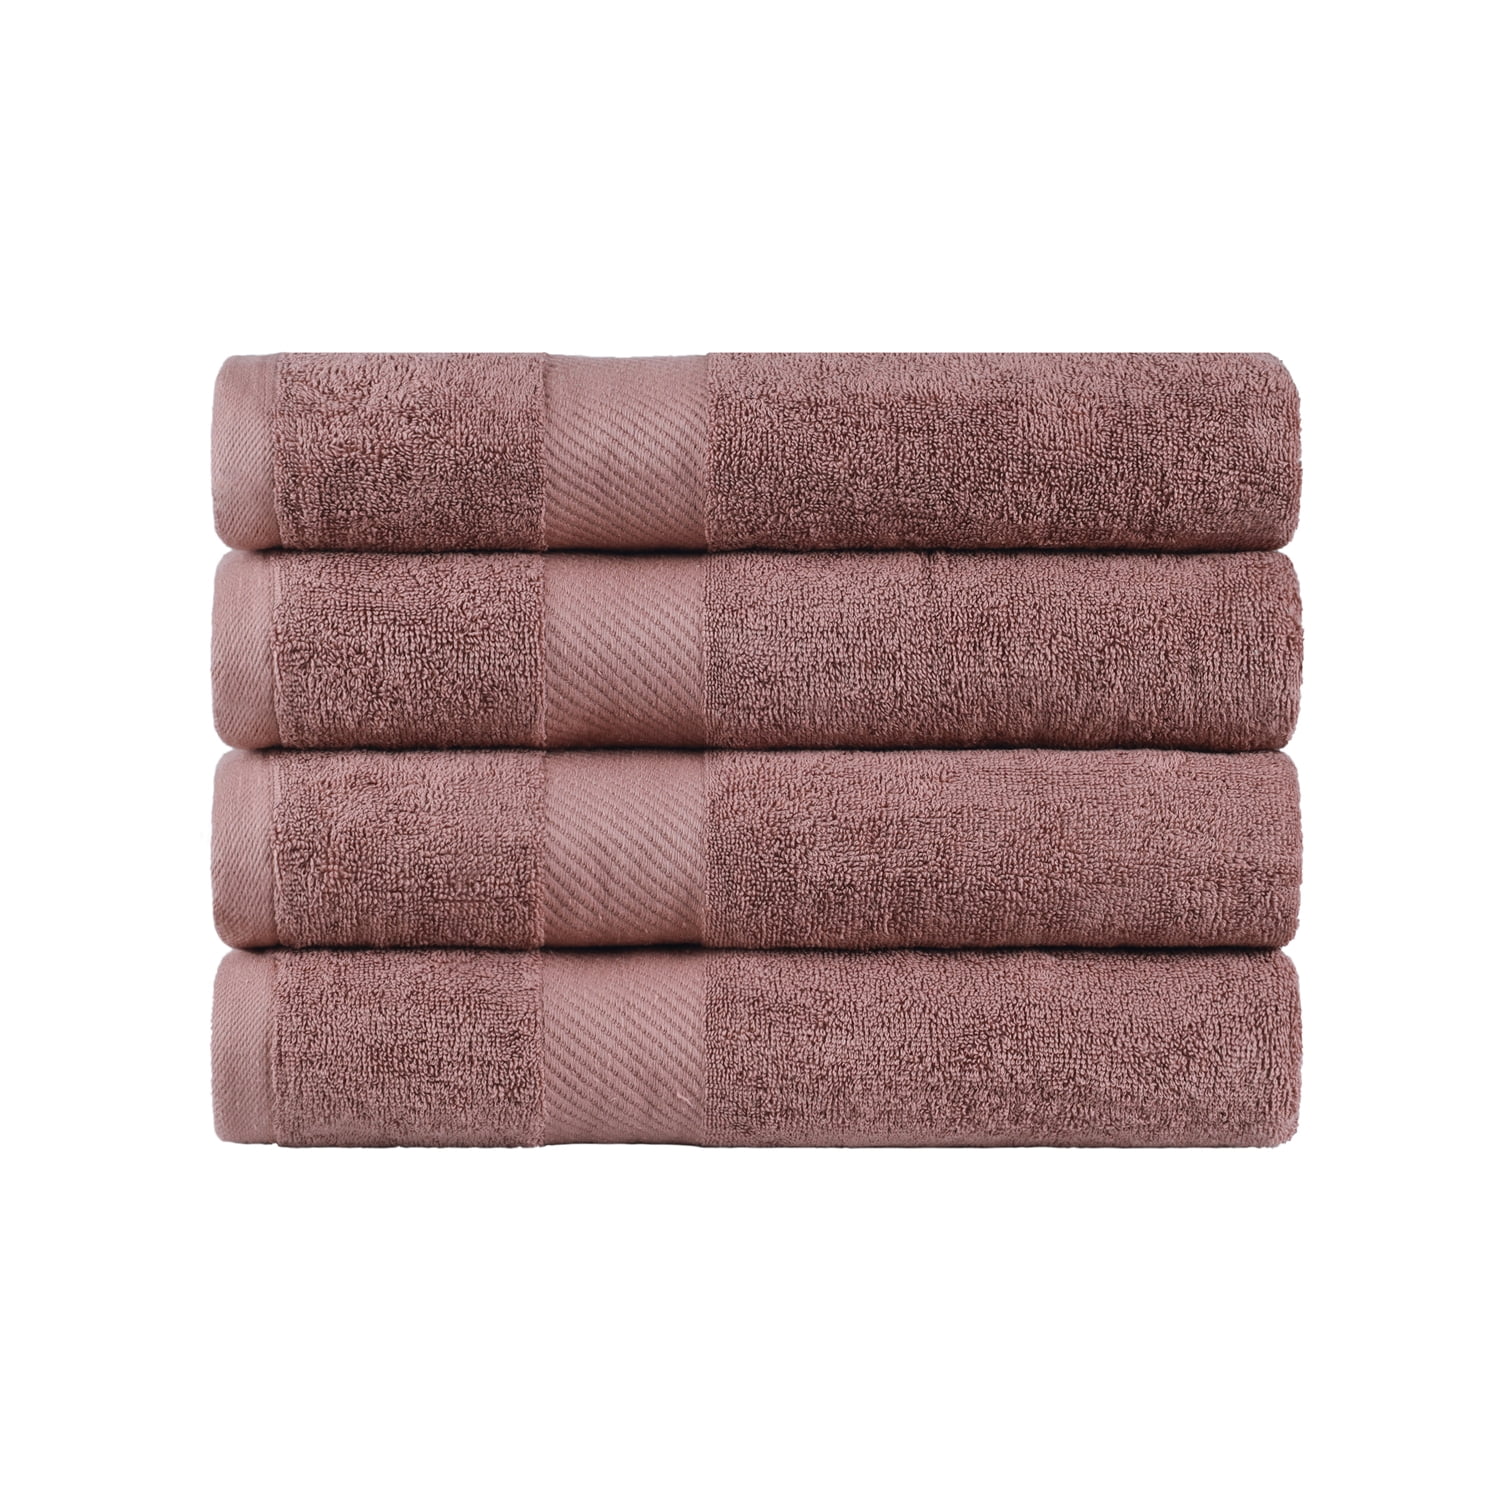 Stone Luxury Egyptian Cotton Towels - Sweave Bedding